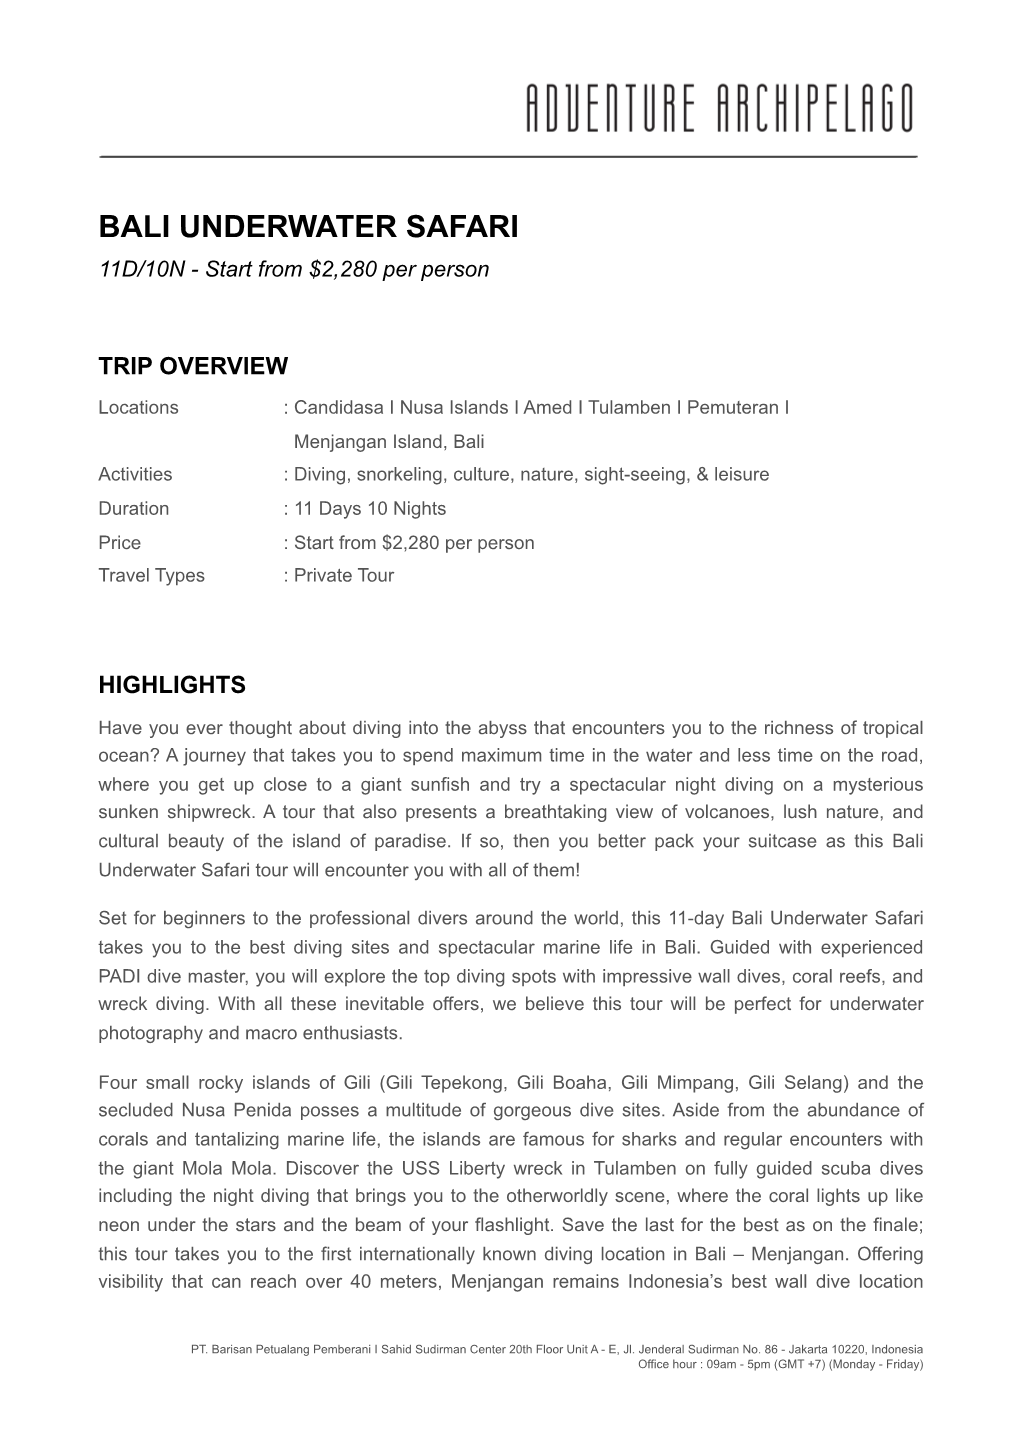 BALI UNDERWATER SAFARI 11D/10N - Start from $2,280 Per Person